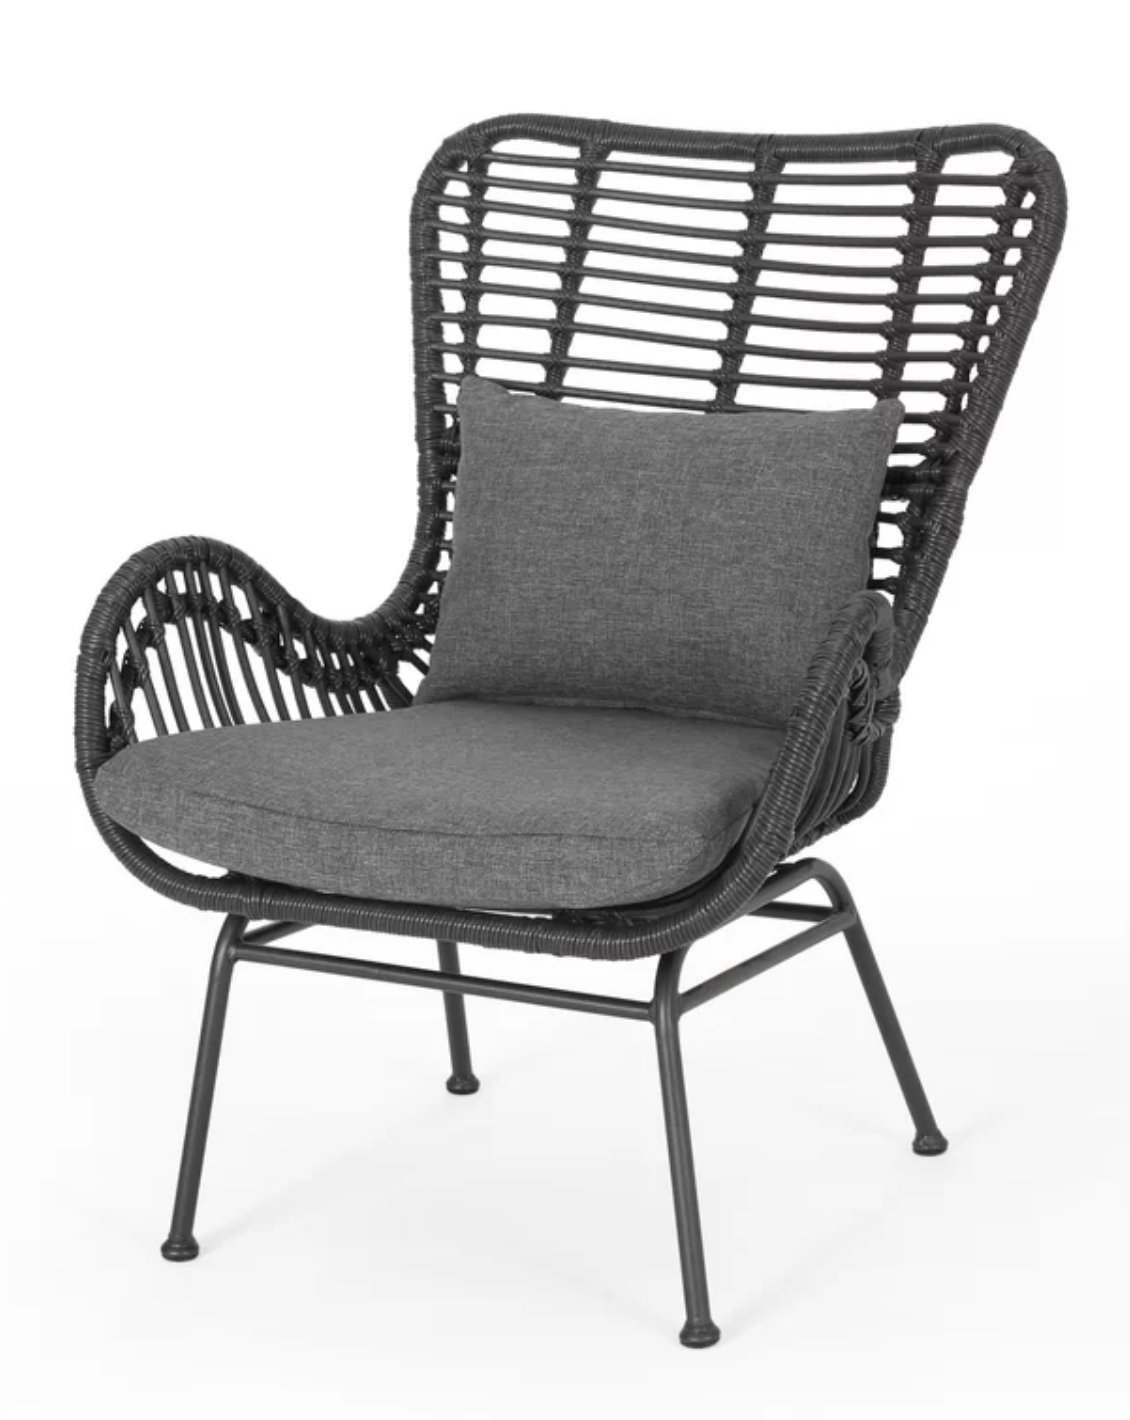 Tarnowski Wicker Patio Chair with Cushions SET OF 2 - Image 0